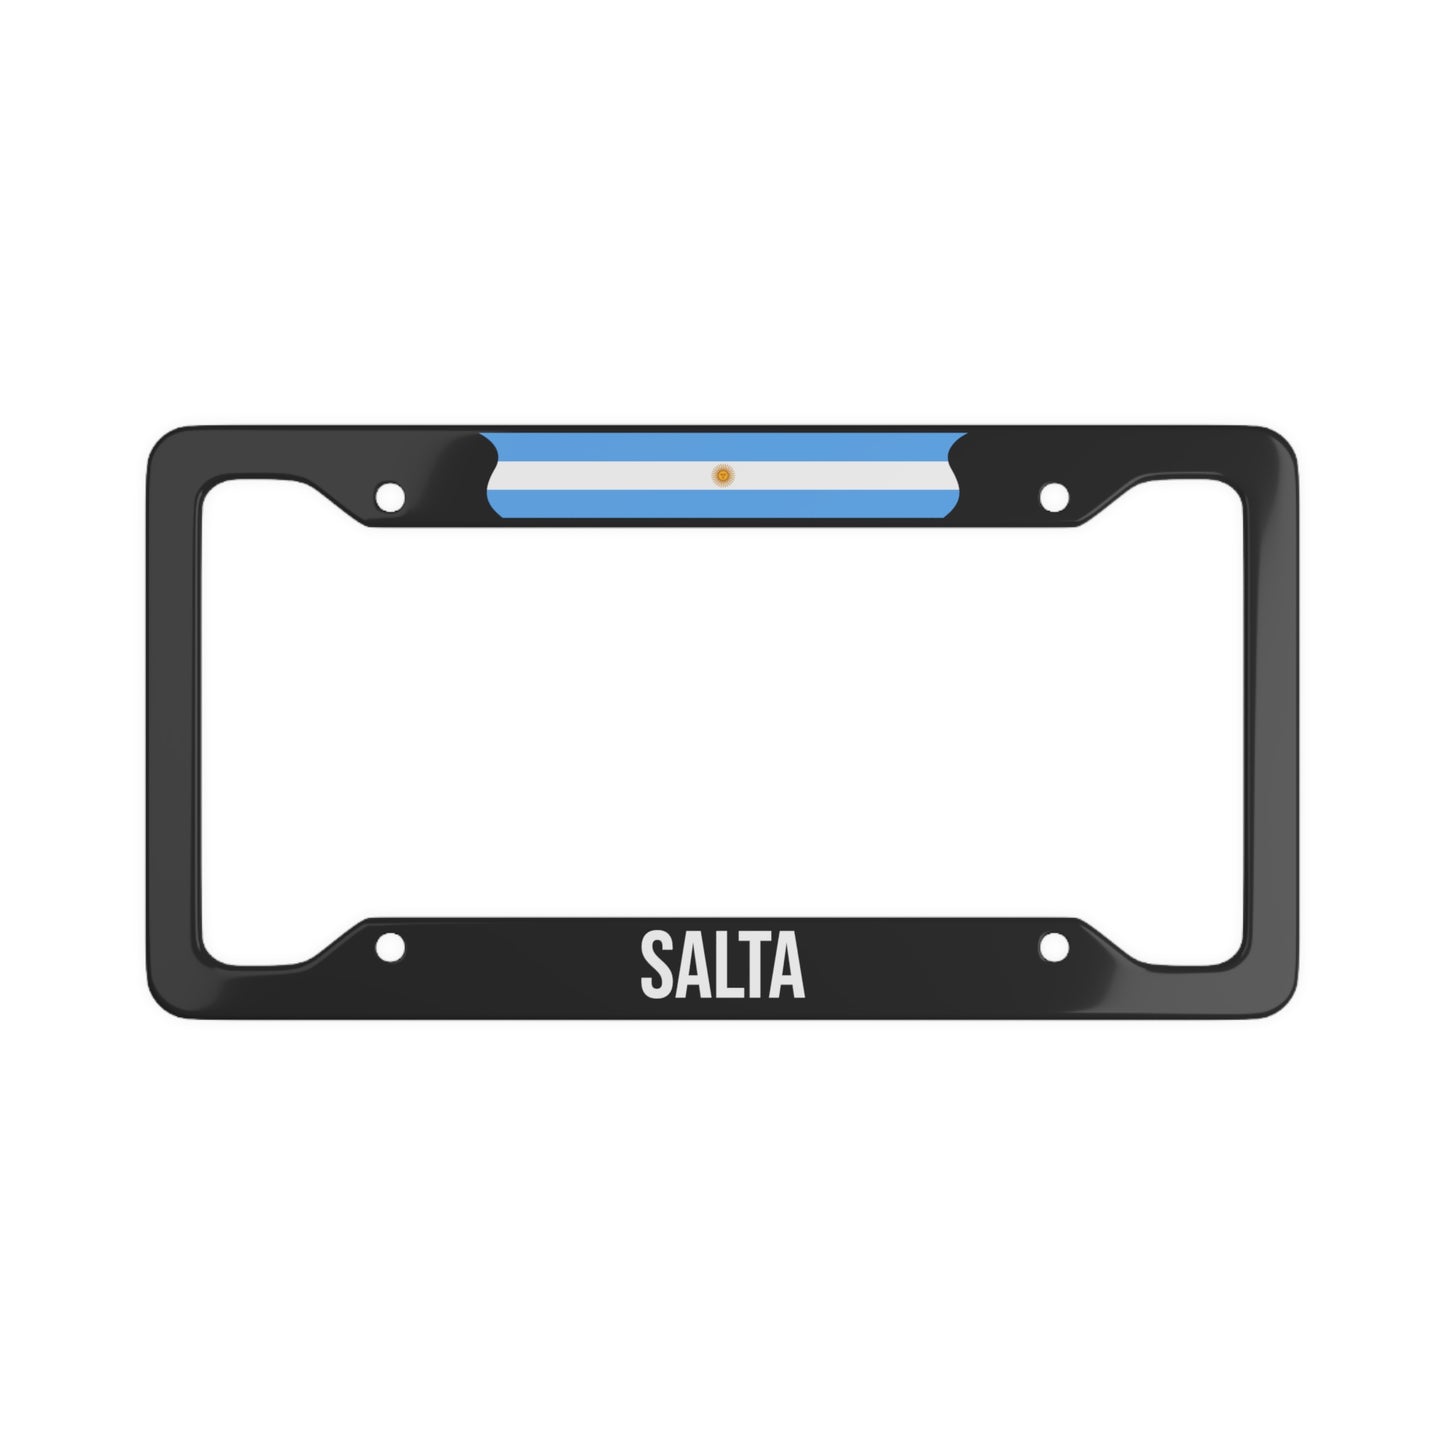 Salta, Argentina Car Plate Frame